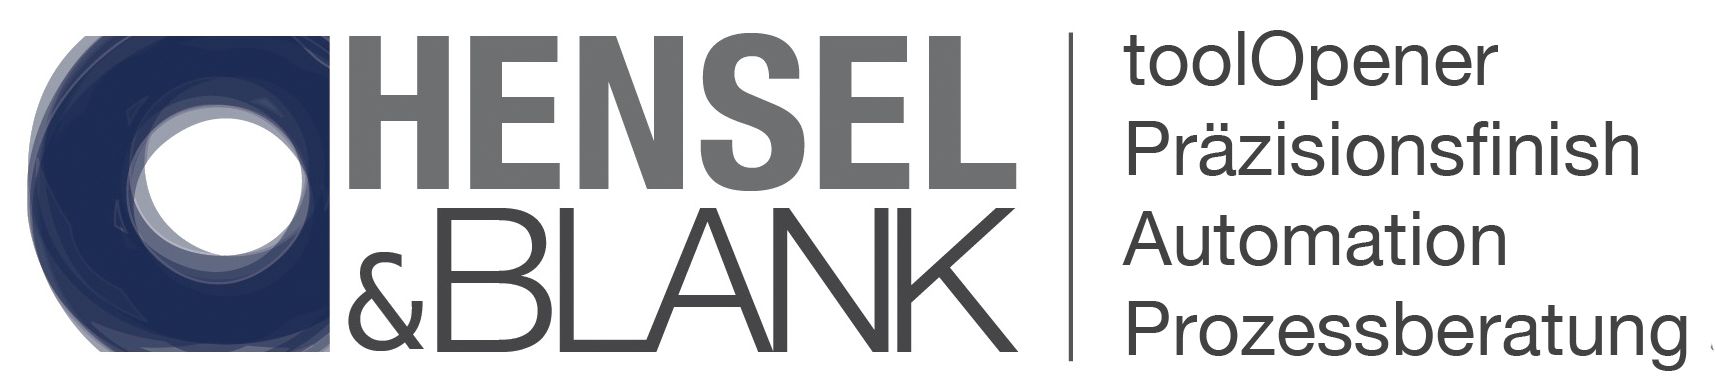 Hensel & Blank GmbH Logo